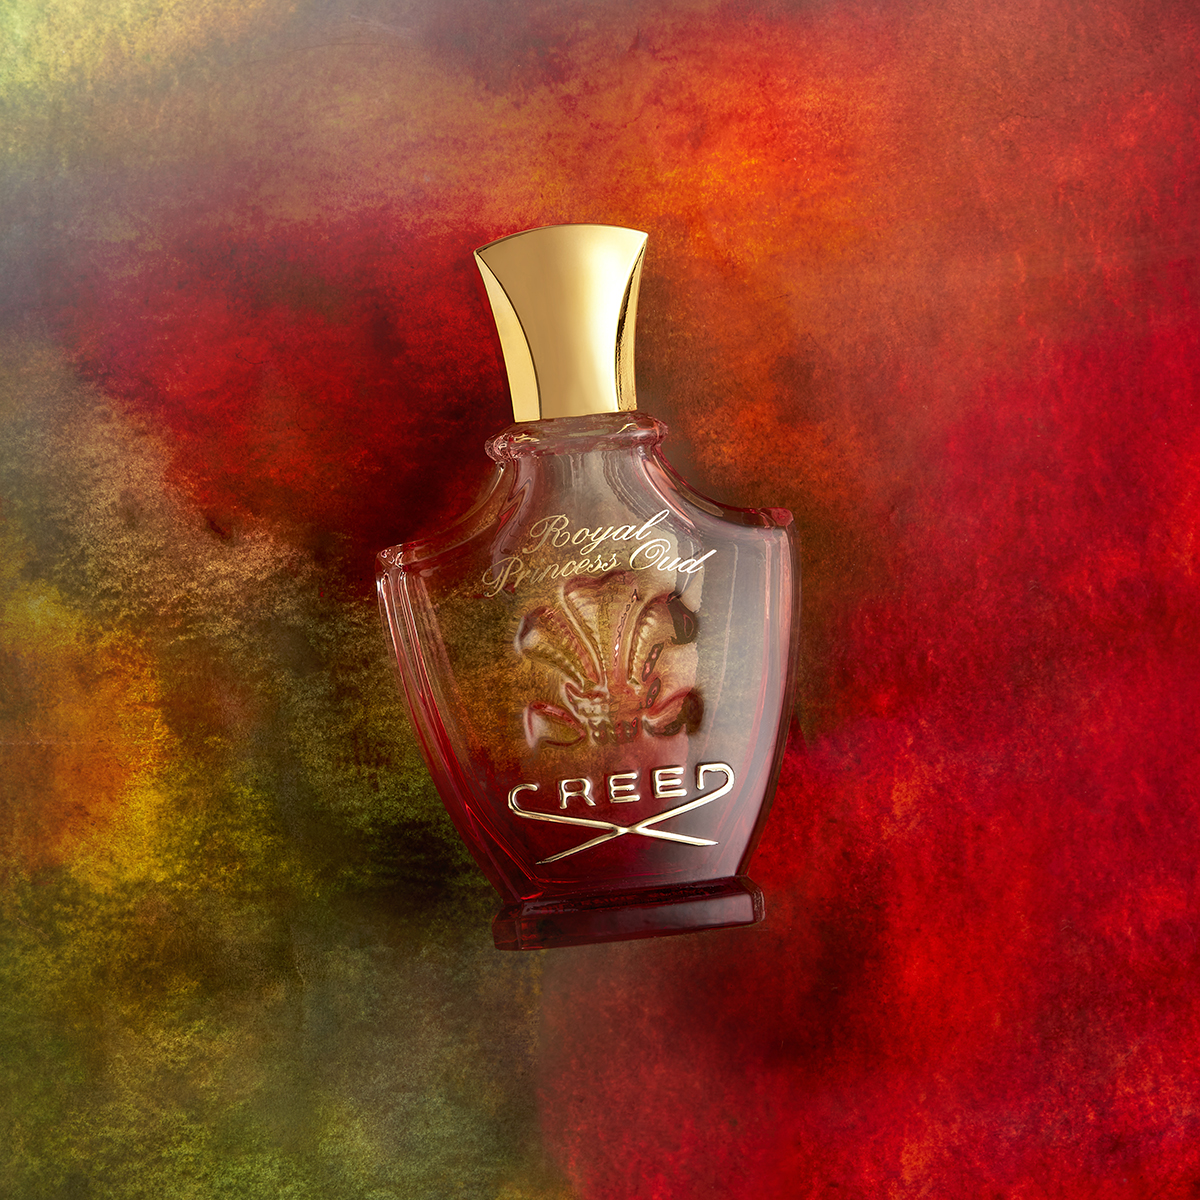 Creed - Royal Princess Oud Eau de Parfum